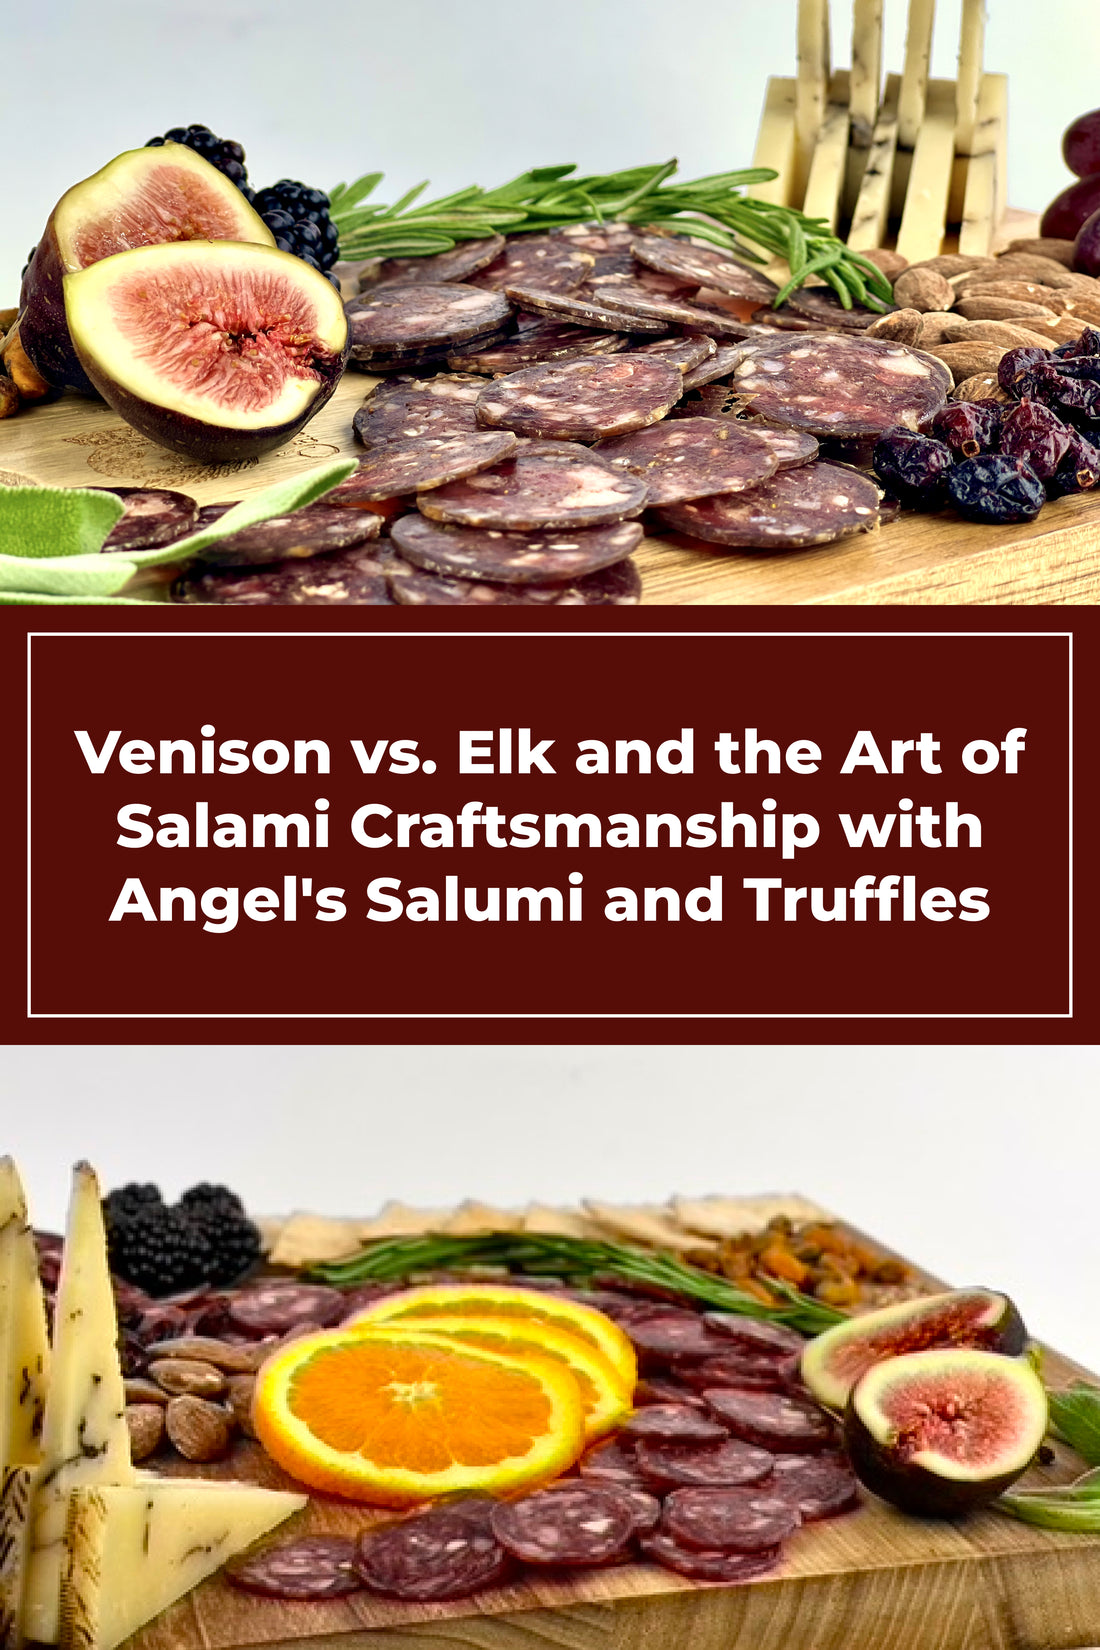 Exploring the Wild: Venison vs. Elk and the Art of Salami Craftsmanship